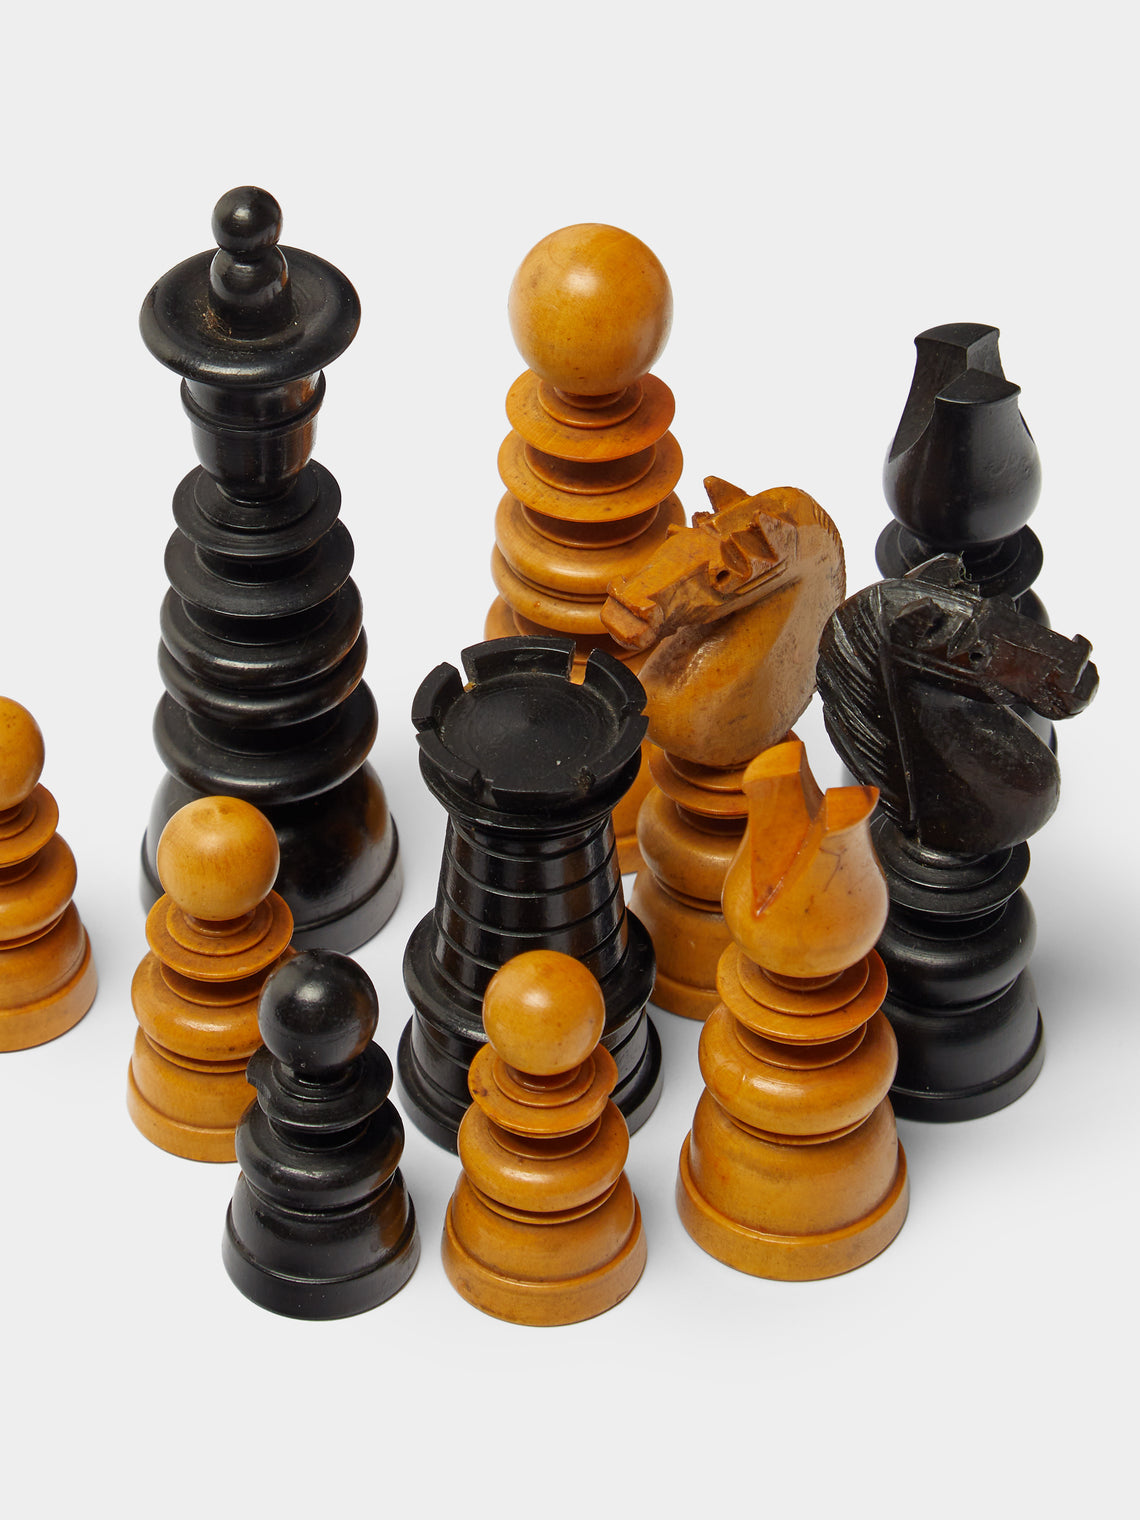 Antique and Vintage - 19th-Century Calvert Boxwood and Ebony Chess Set -  - ABASK